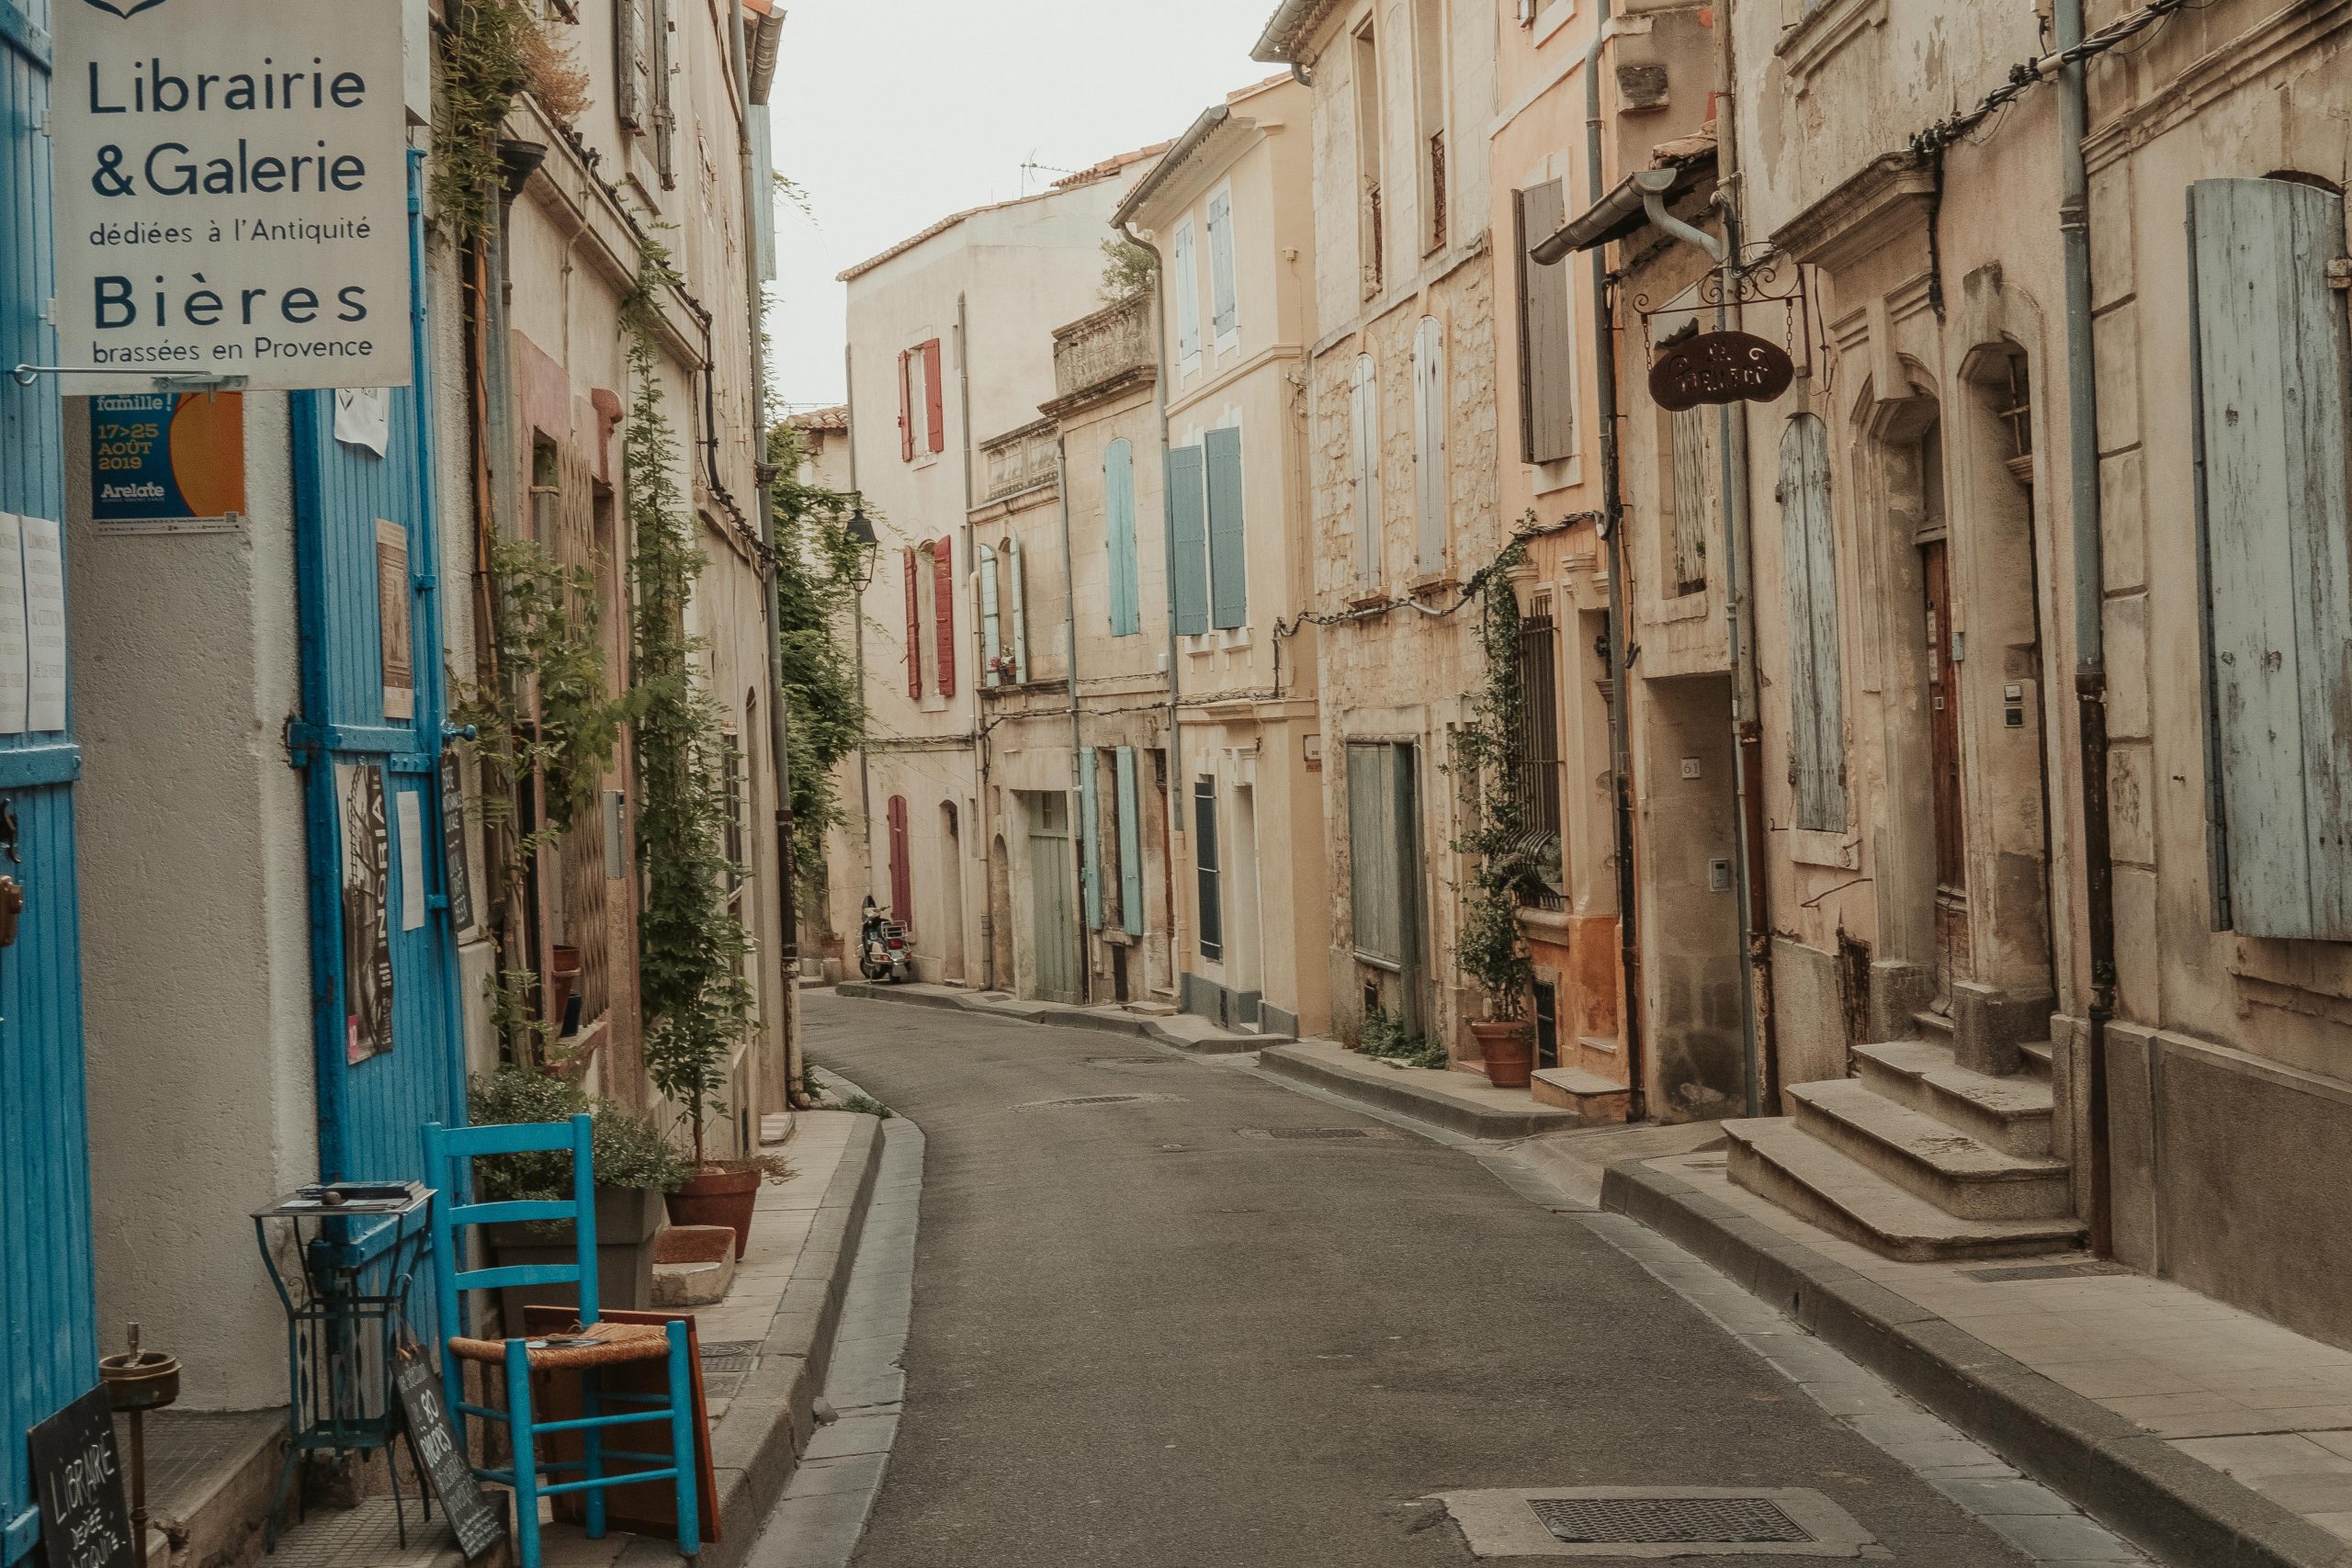 Beautiful old town of Arles